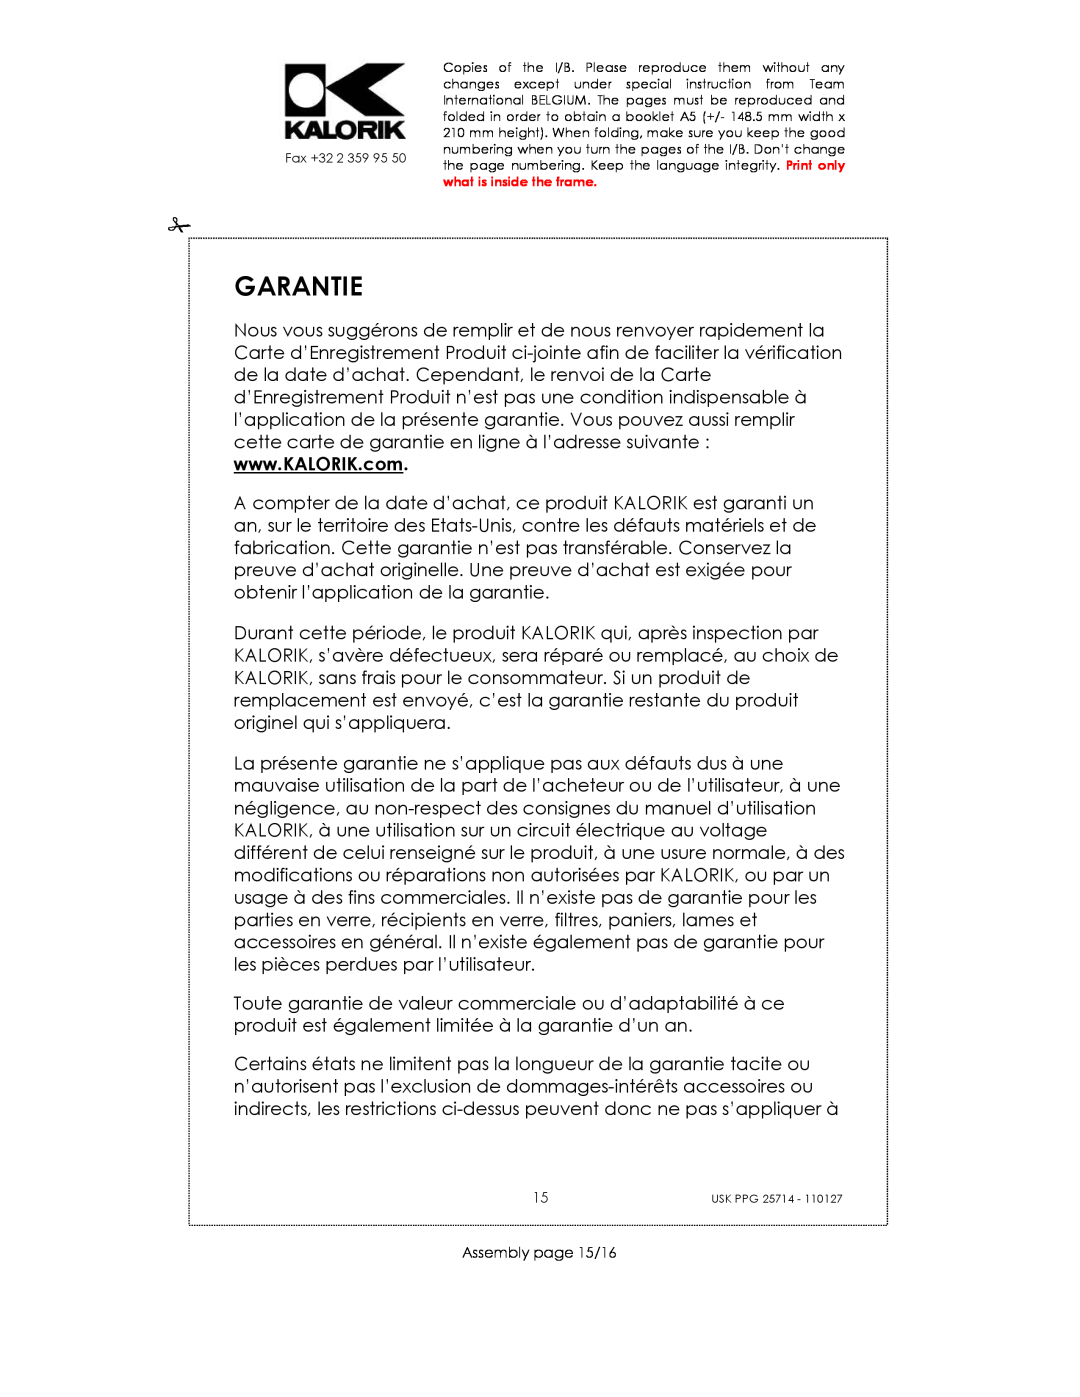 Kalorik USK PPG 25714 manual Garantie, Assembly page 15/16 